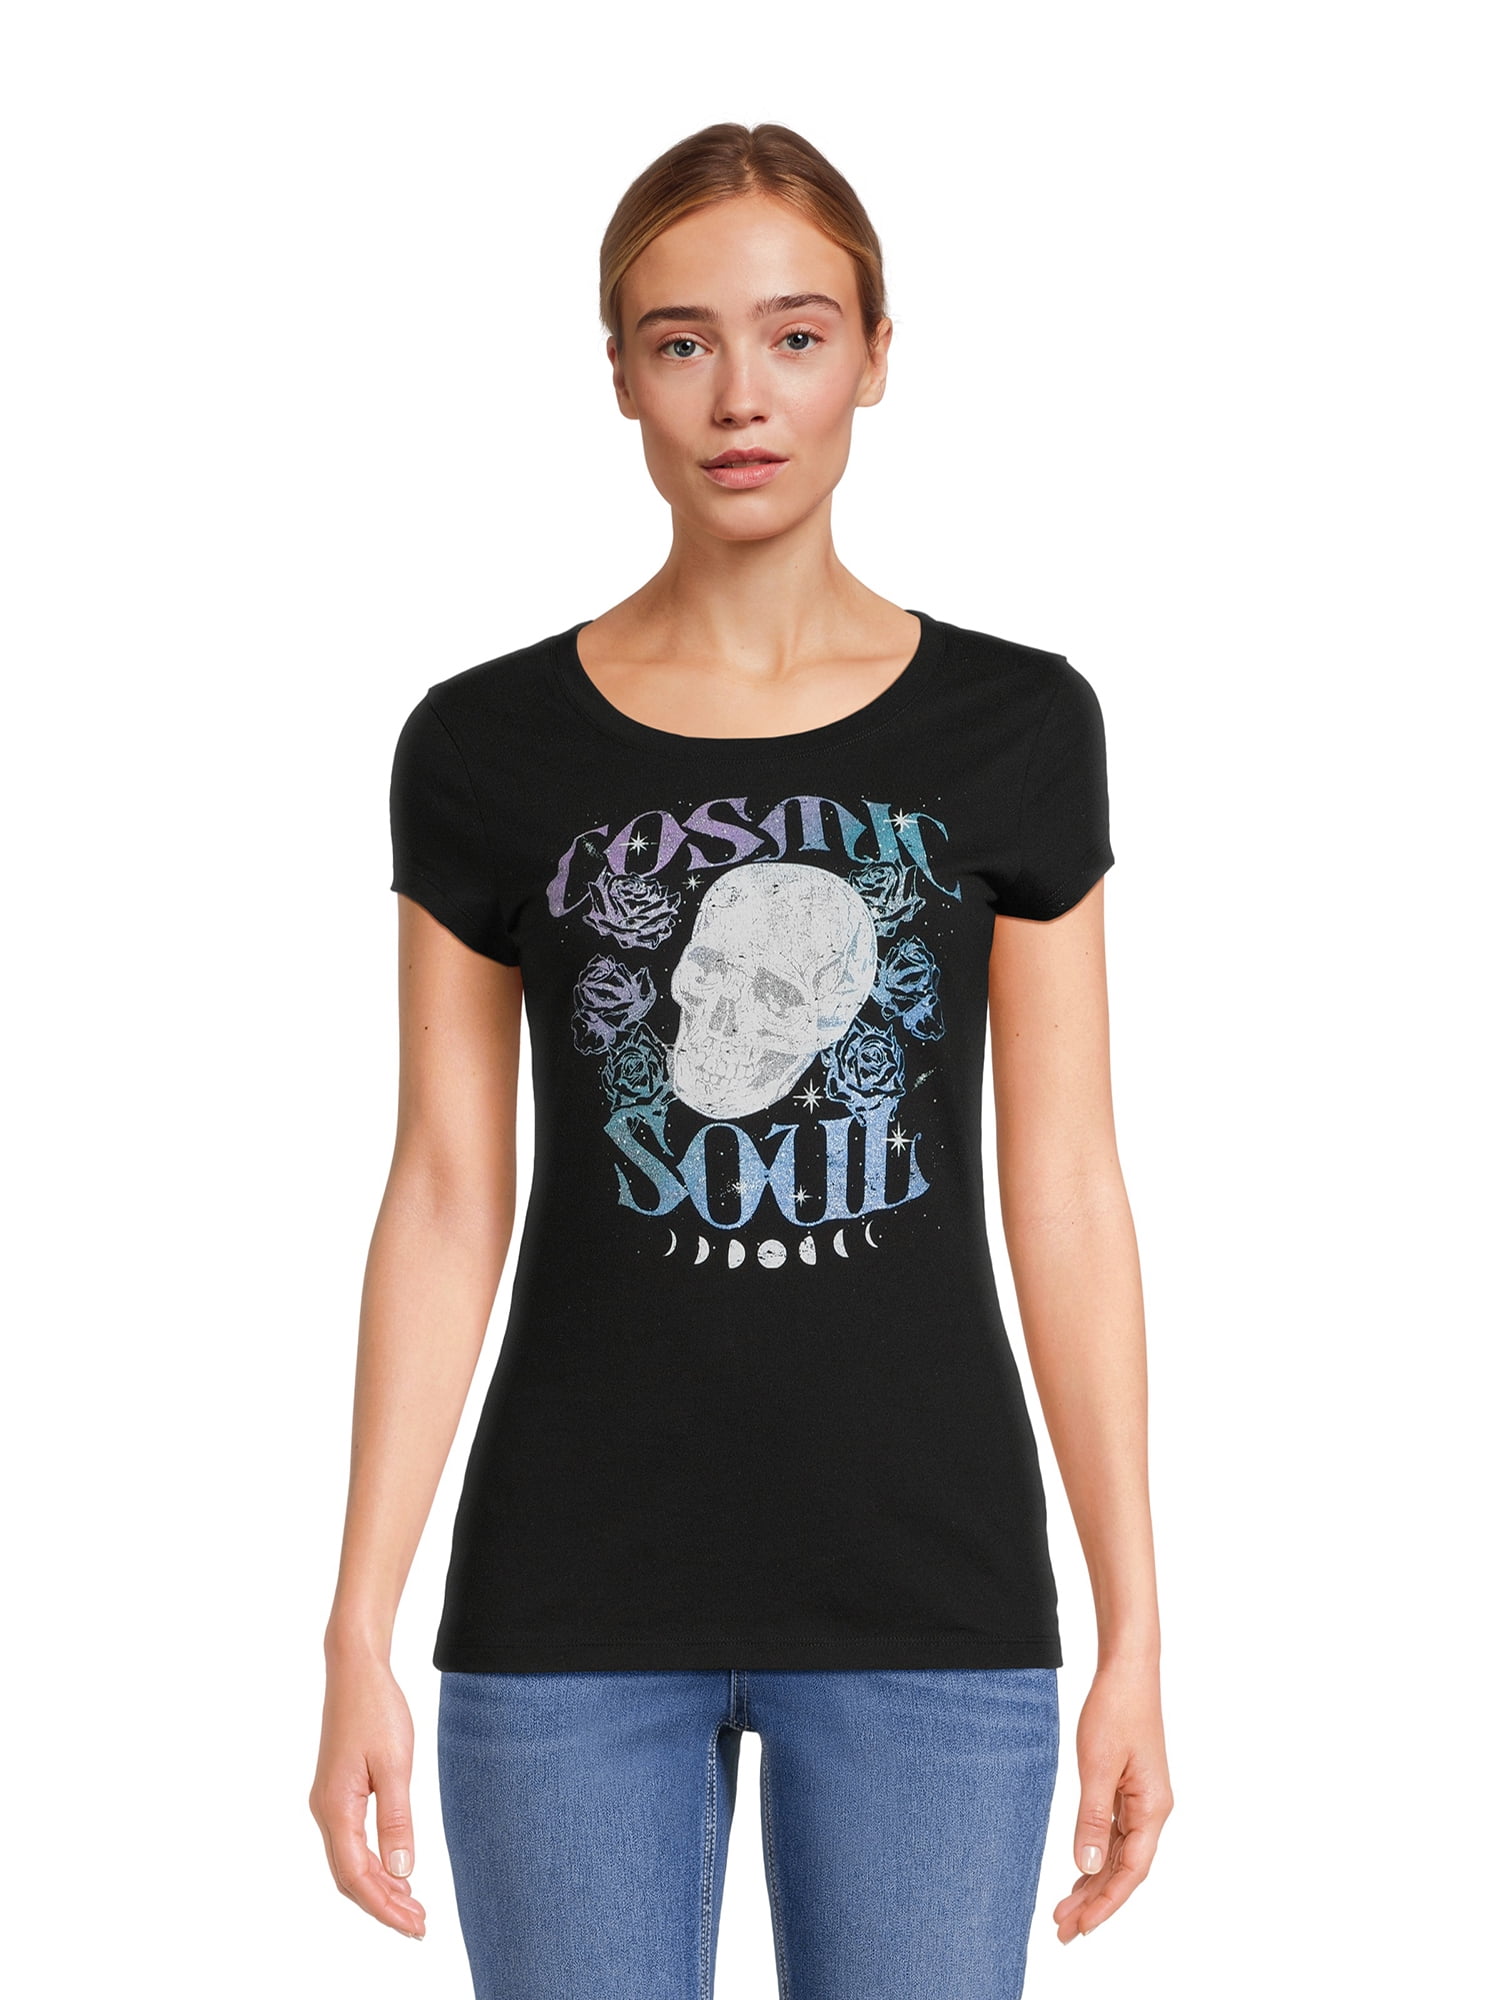 Women's Cosmic Soul Short Sleeve Graphic T-Shirt - Walmart.com